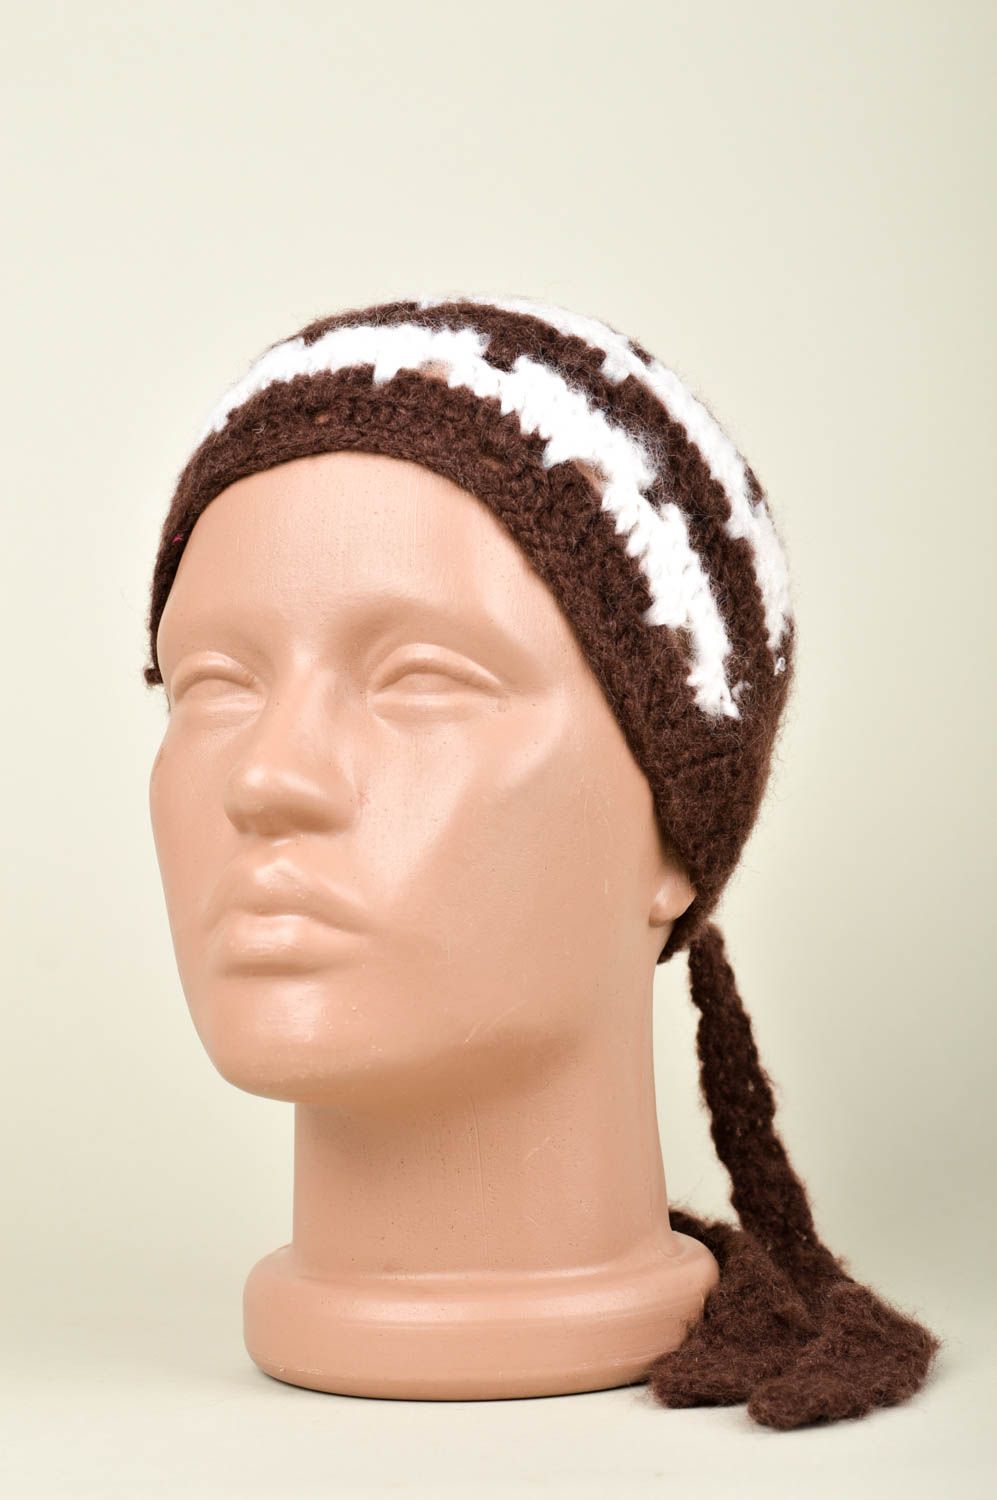 Handmade crocheted headband unusual brown headband cute stylish accessory photo 1